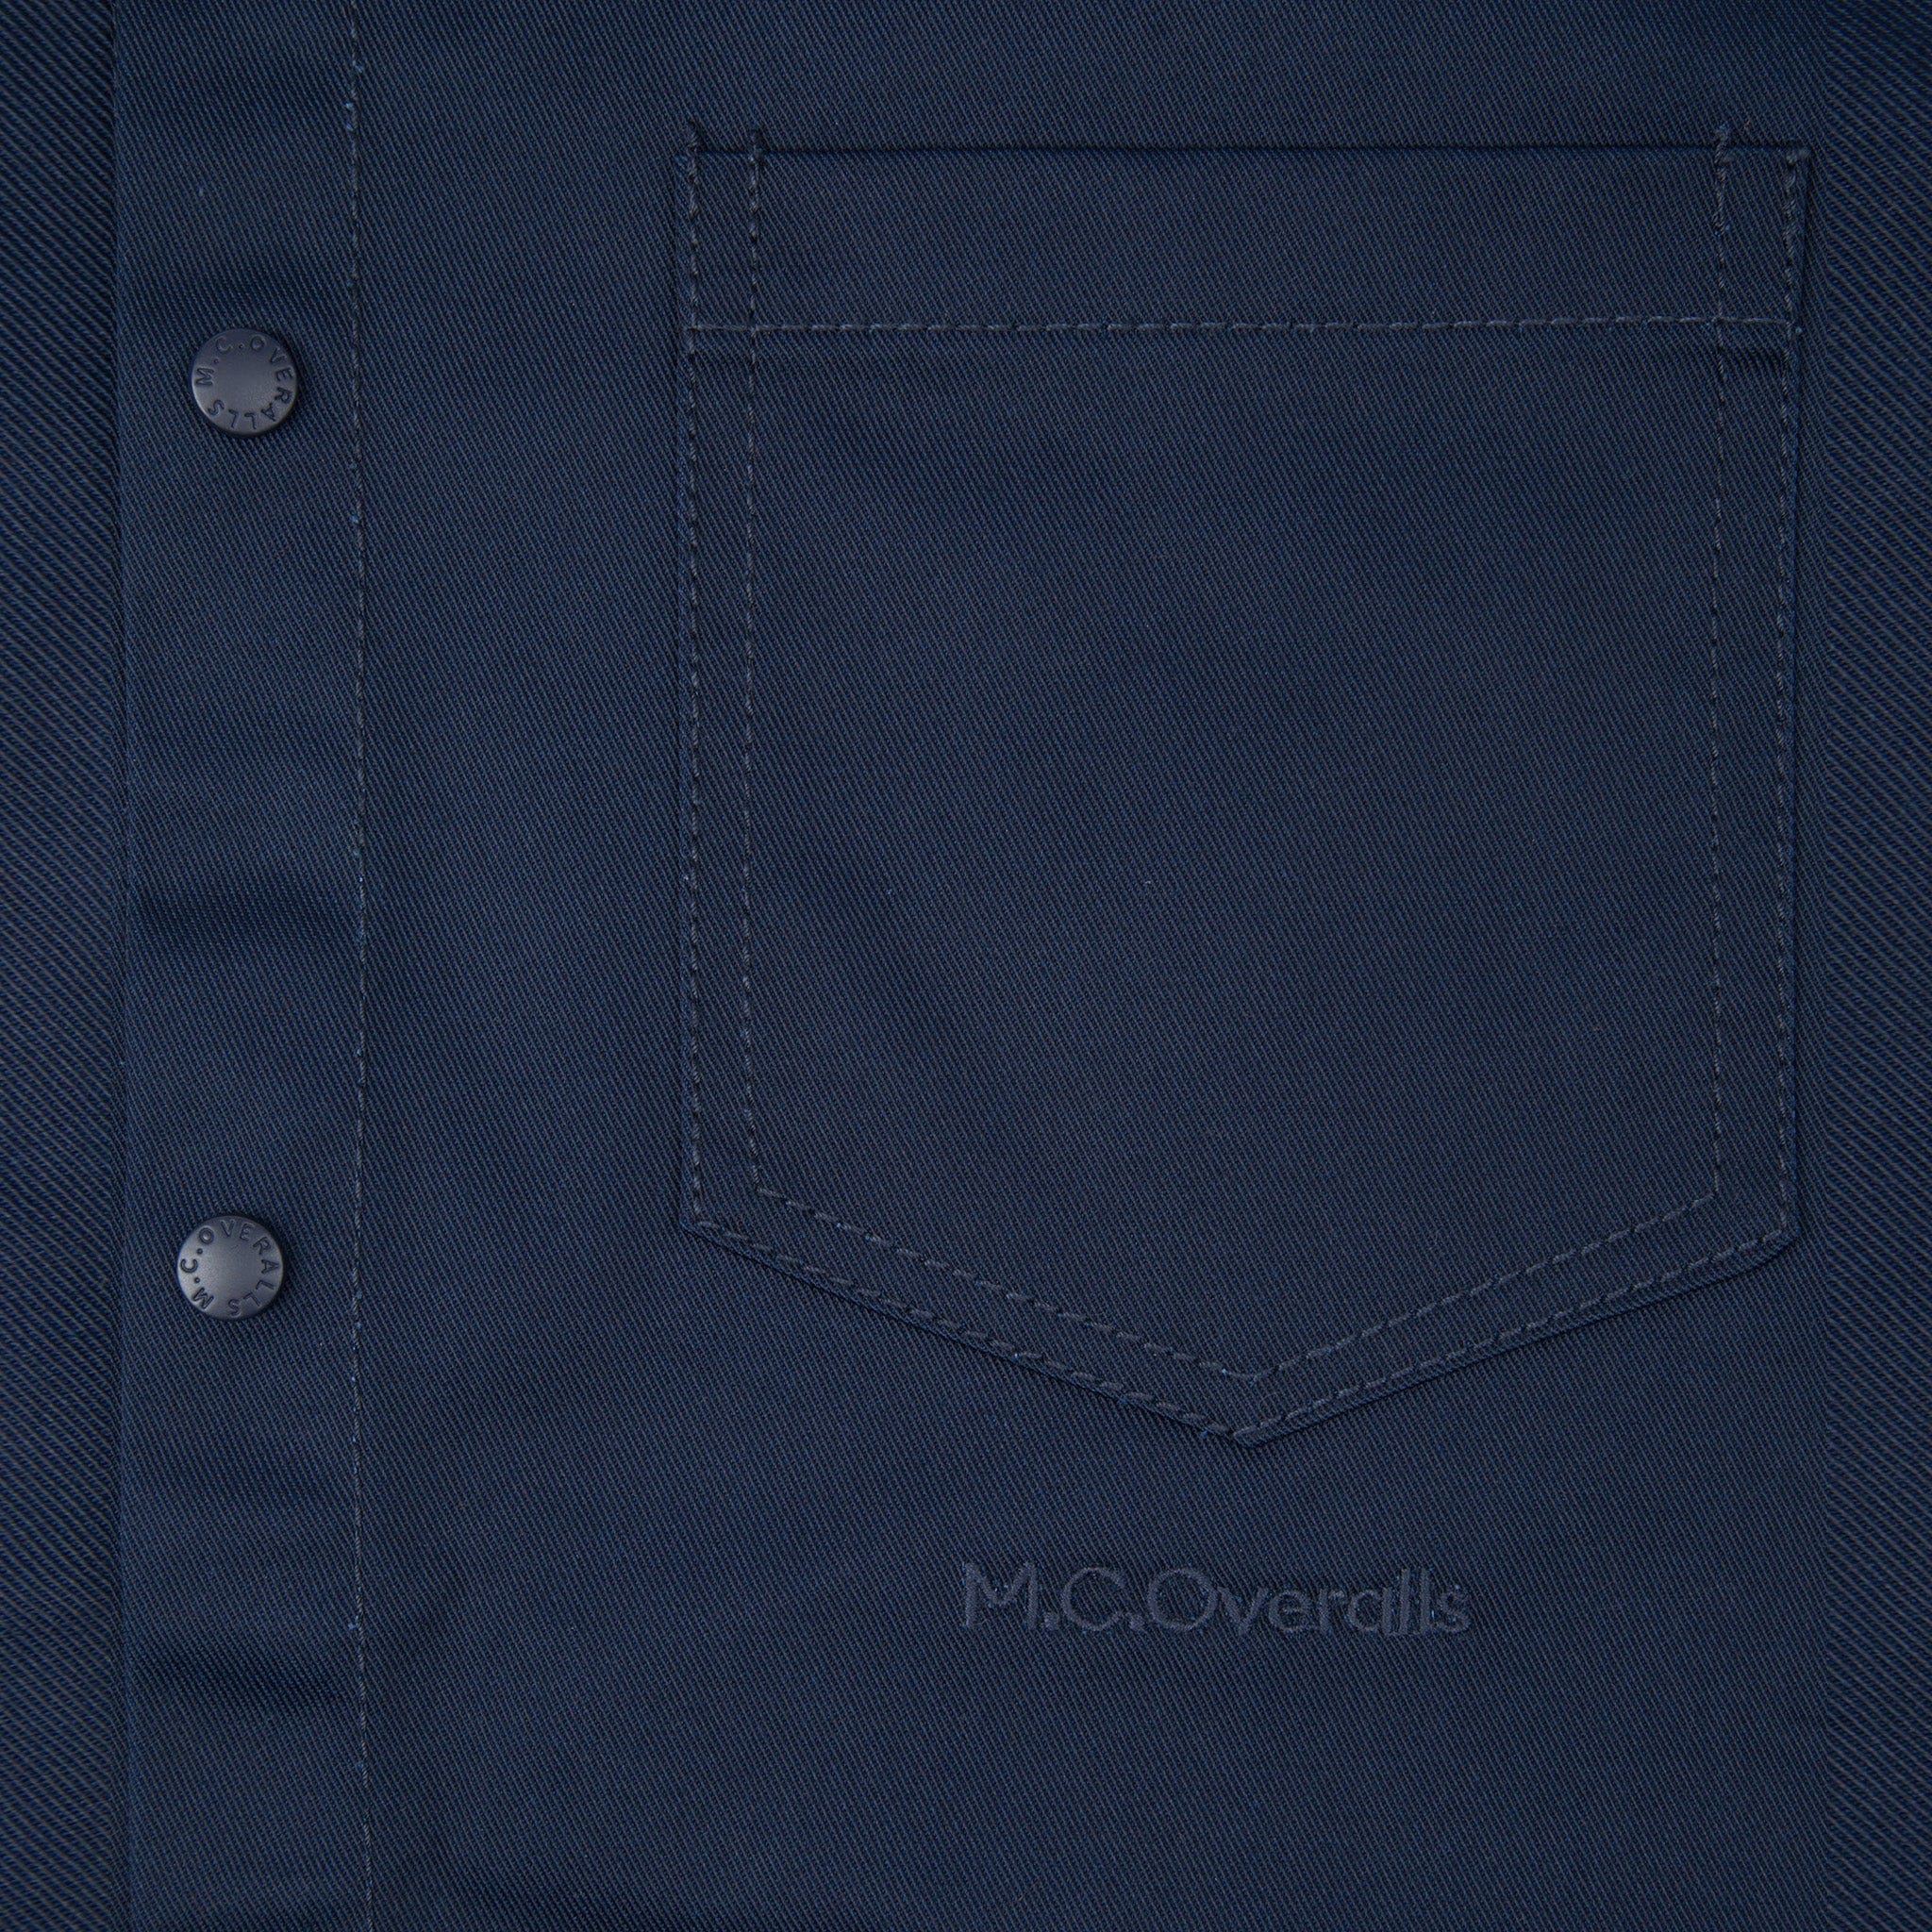 M.C.O's Logo Below the Pocket of the Navy Blue Snap Shirt in Soho, London.